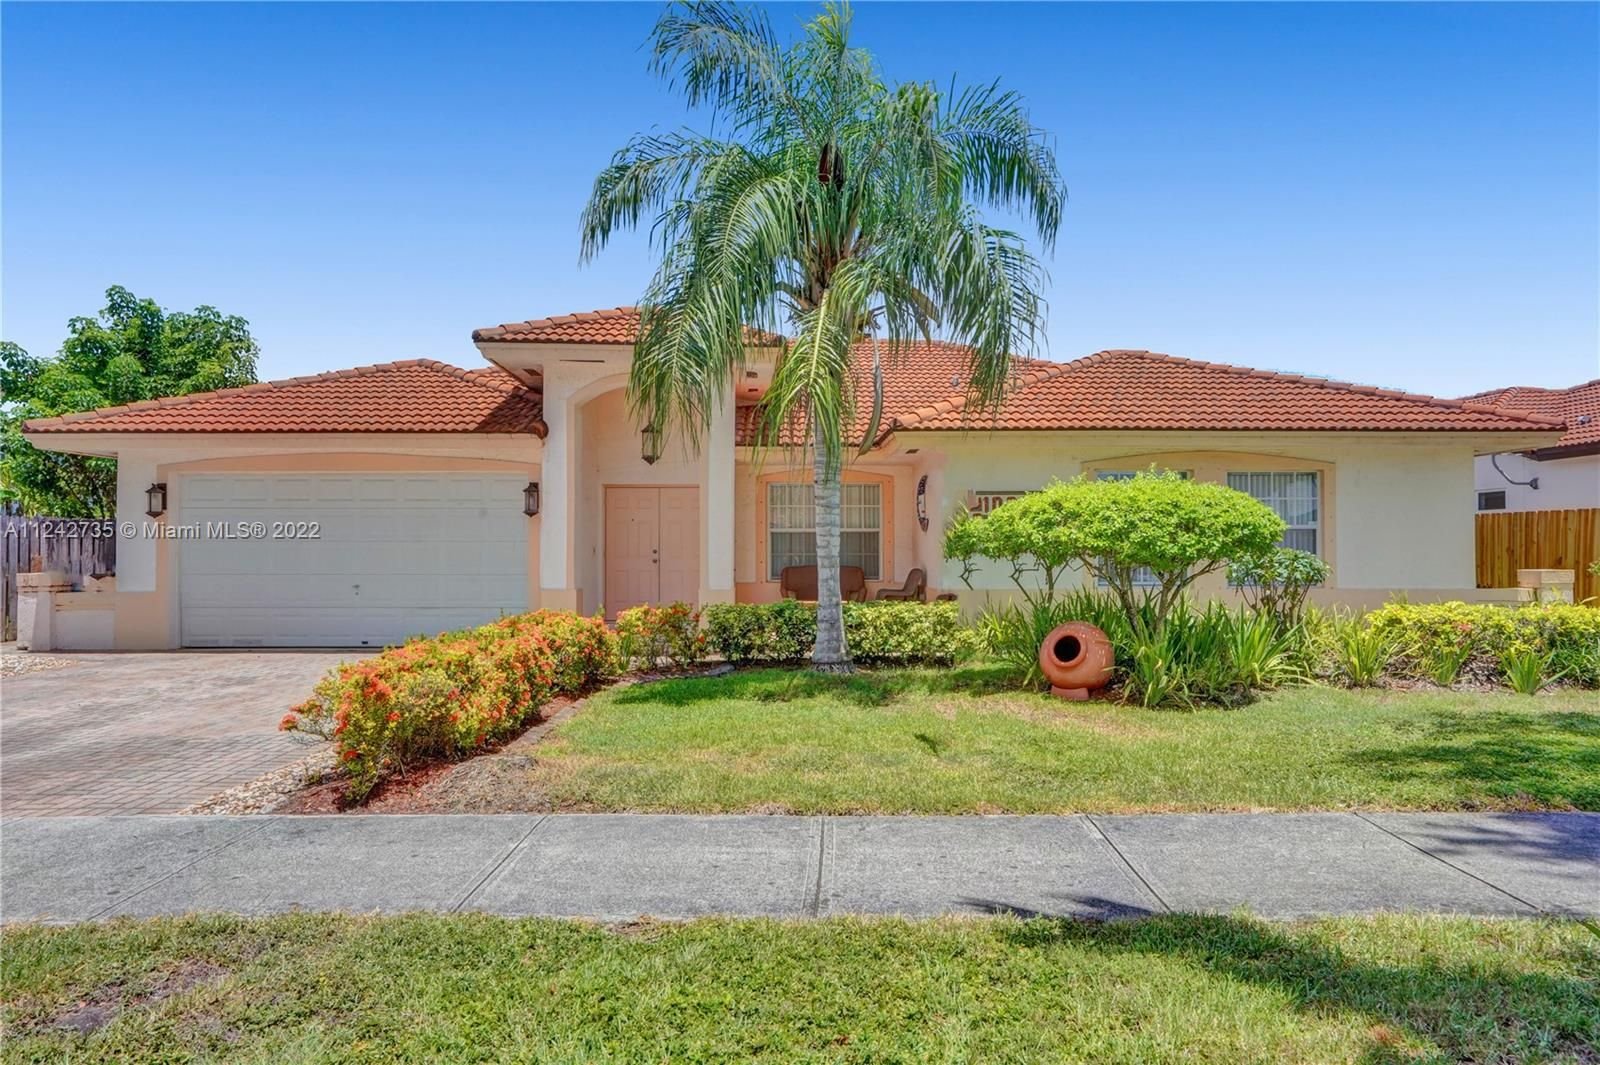 Real estate property located at 10013 159th Ave, Miami-Dade County, Miami, FL